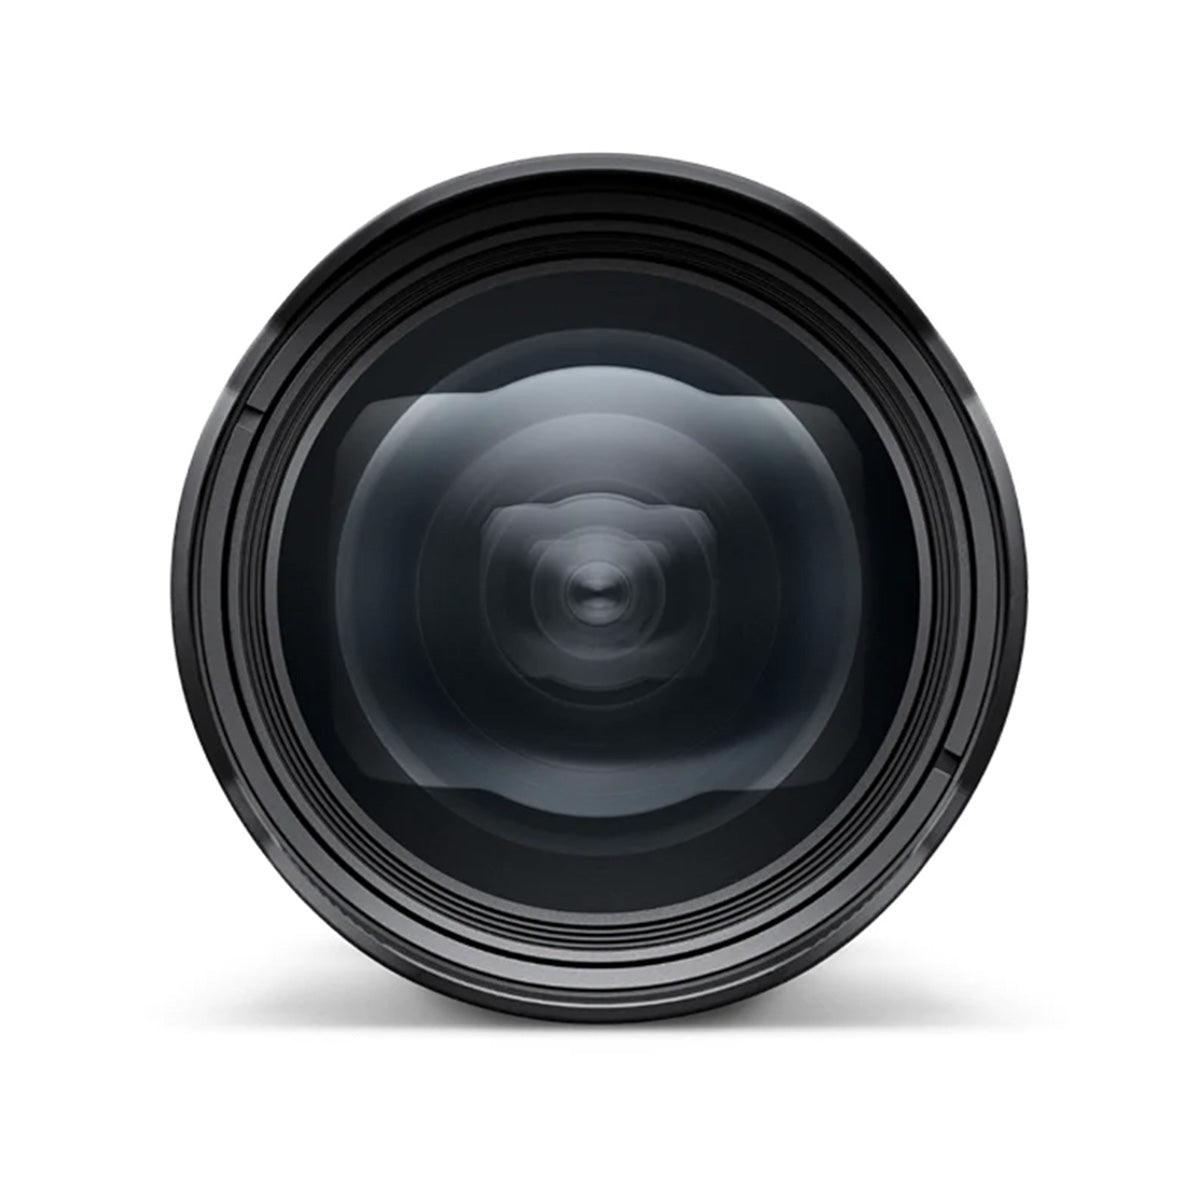 Leica Super-Vario-Elmarit-SL 14-24mm F2.8 ASPH